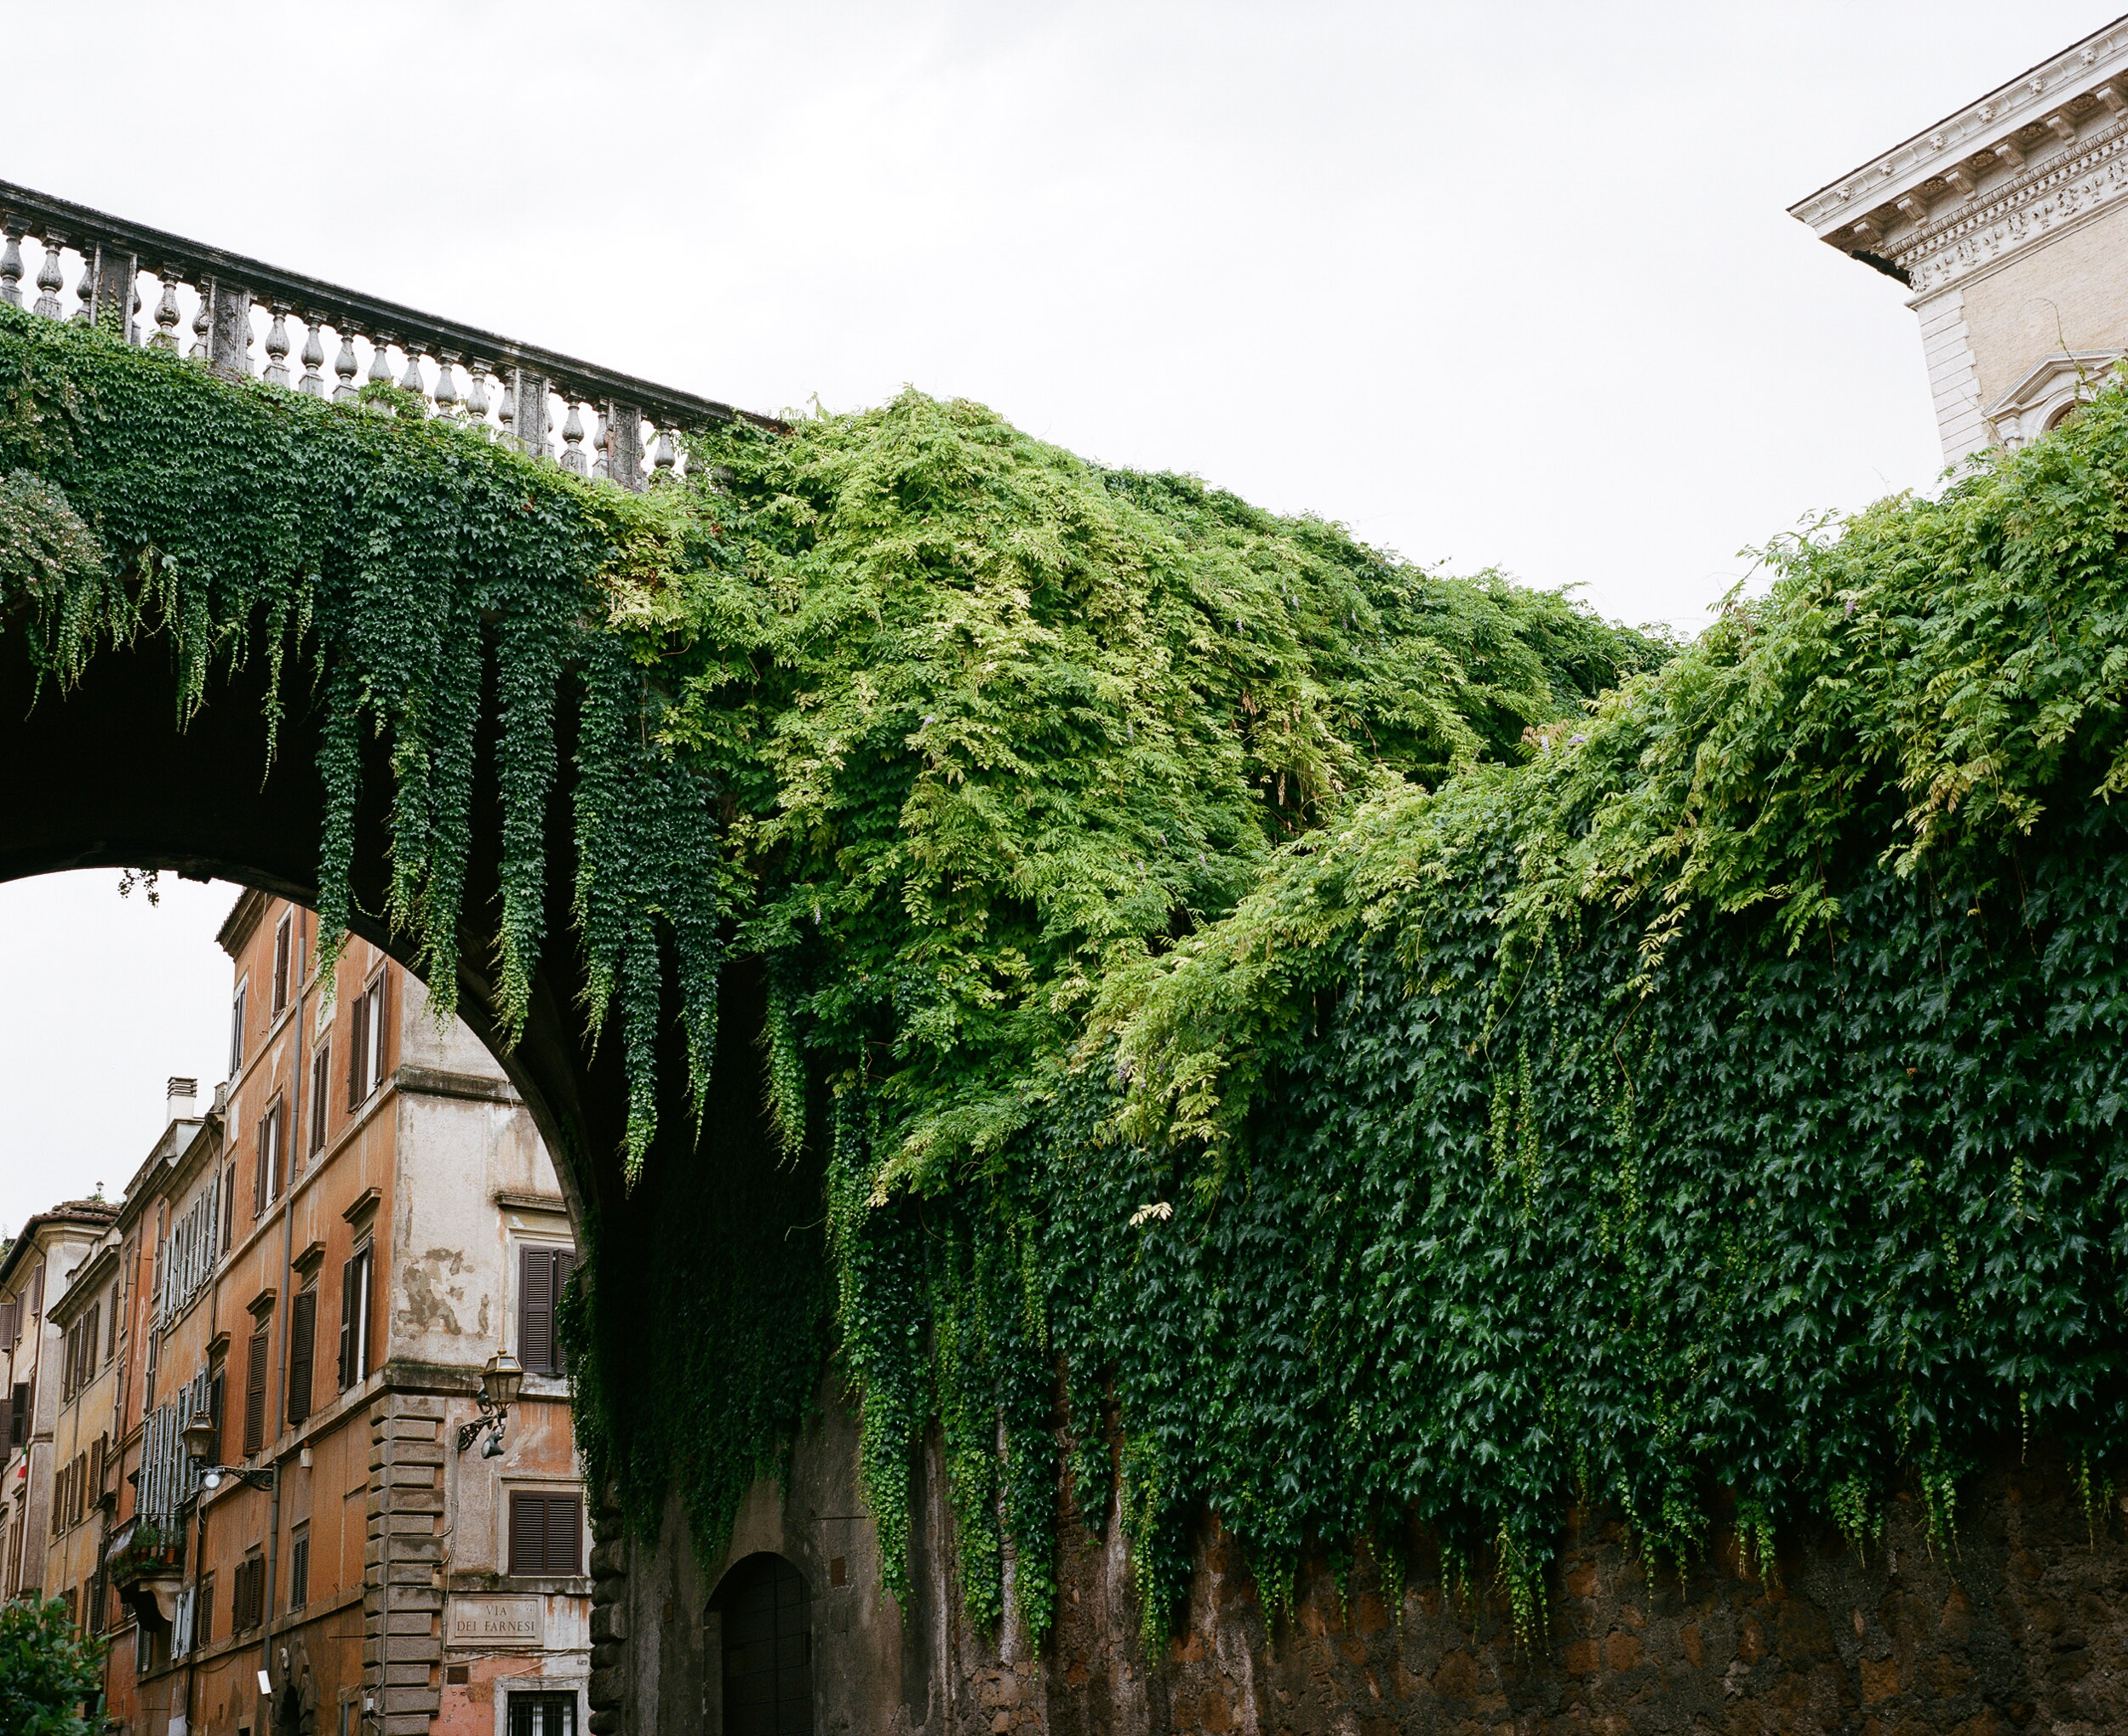 Bridge Covered In Vines, Rome, Italy